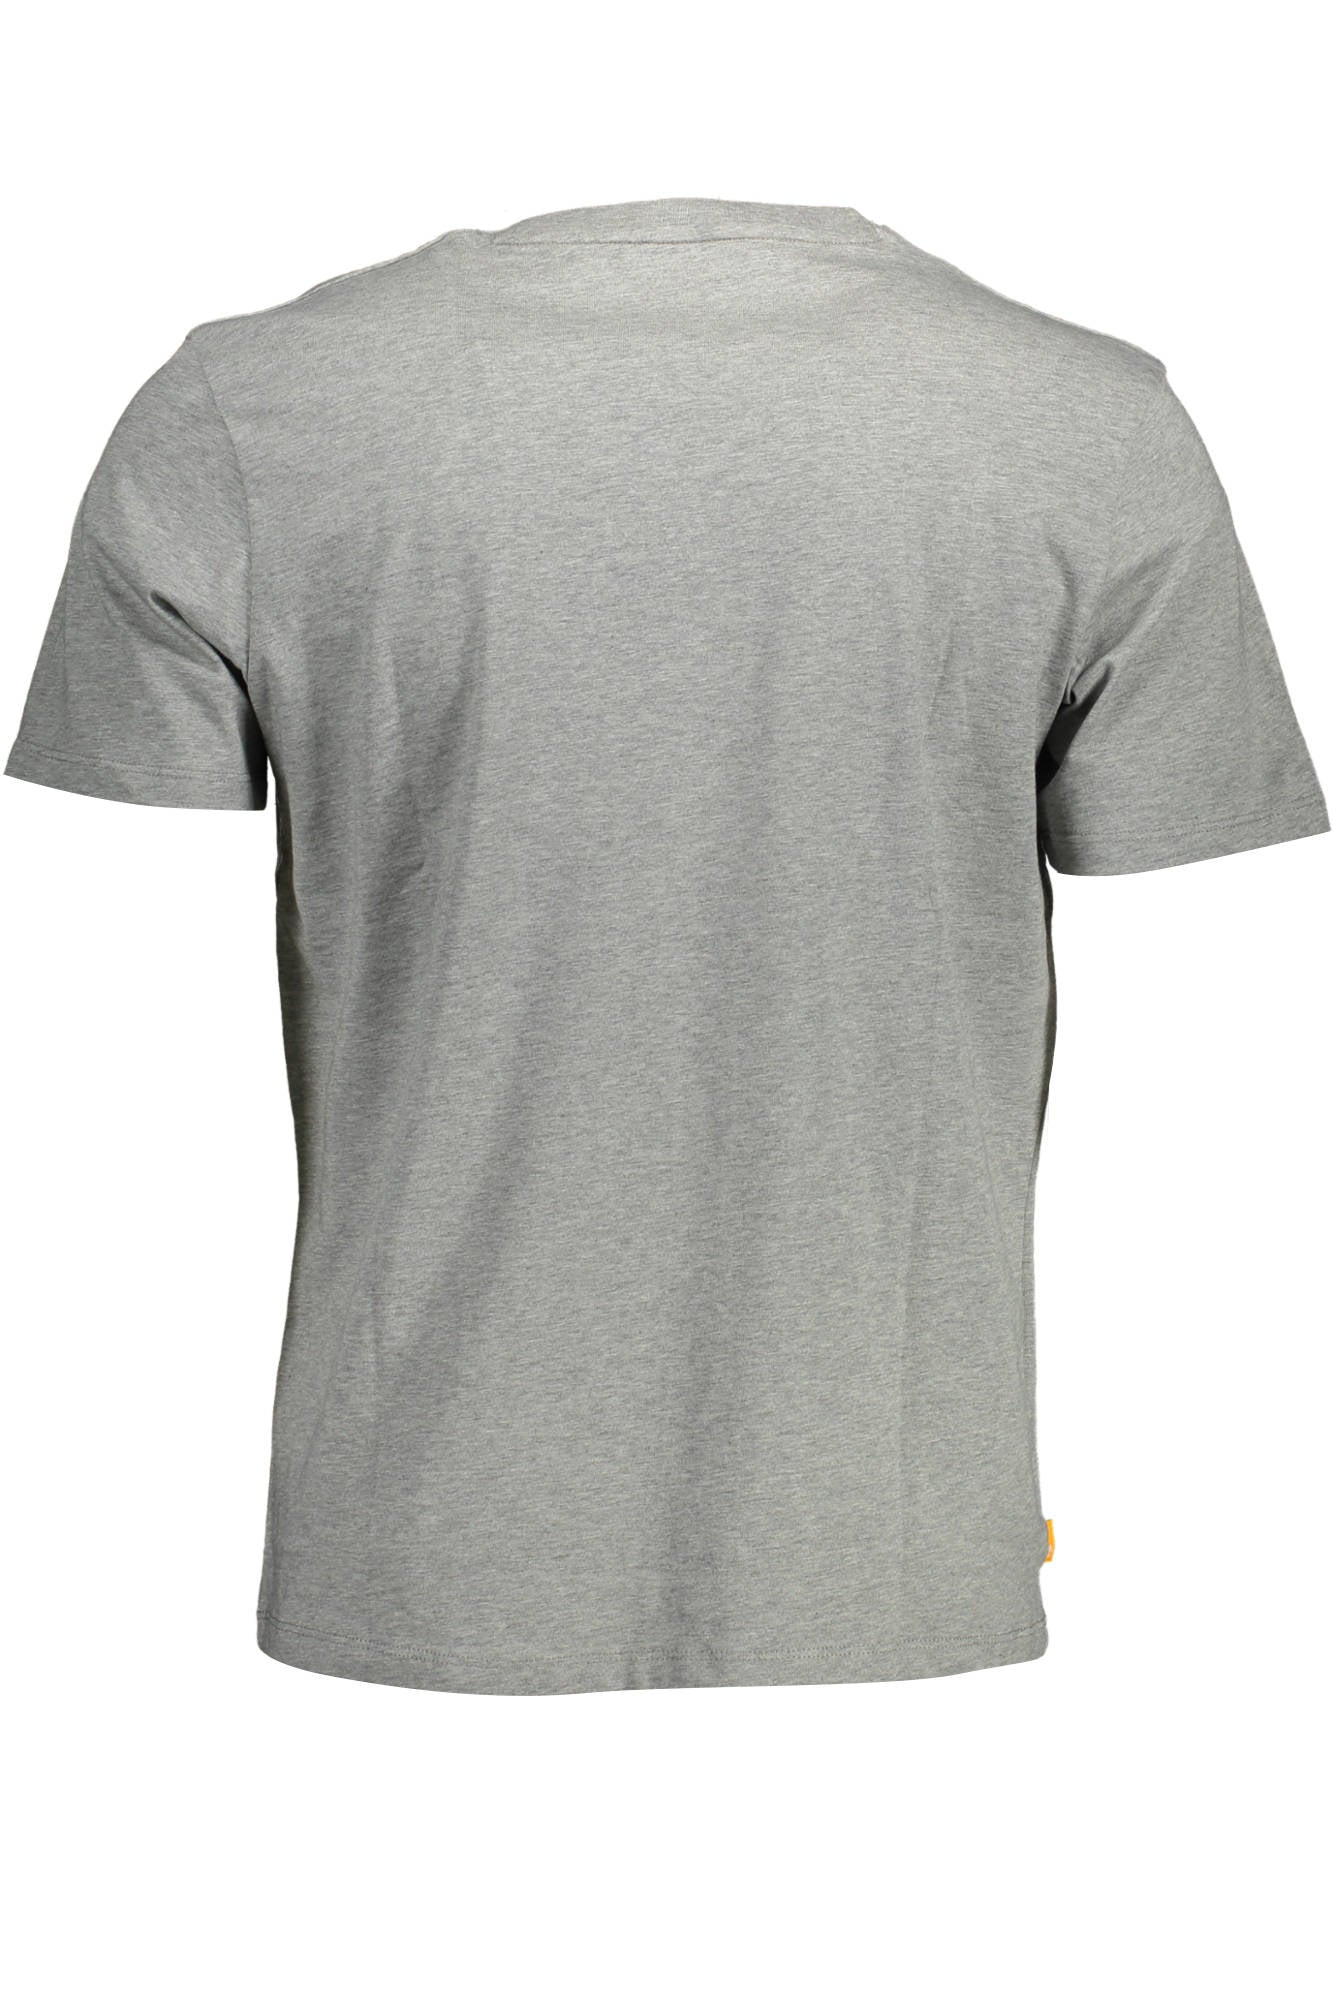 Timberland Gray T-Shirt - Fizigo